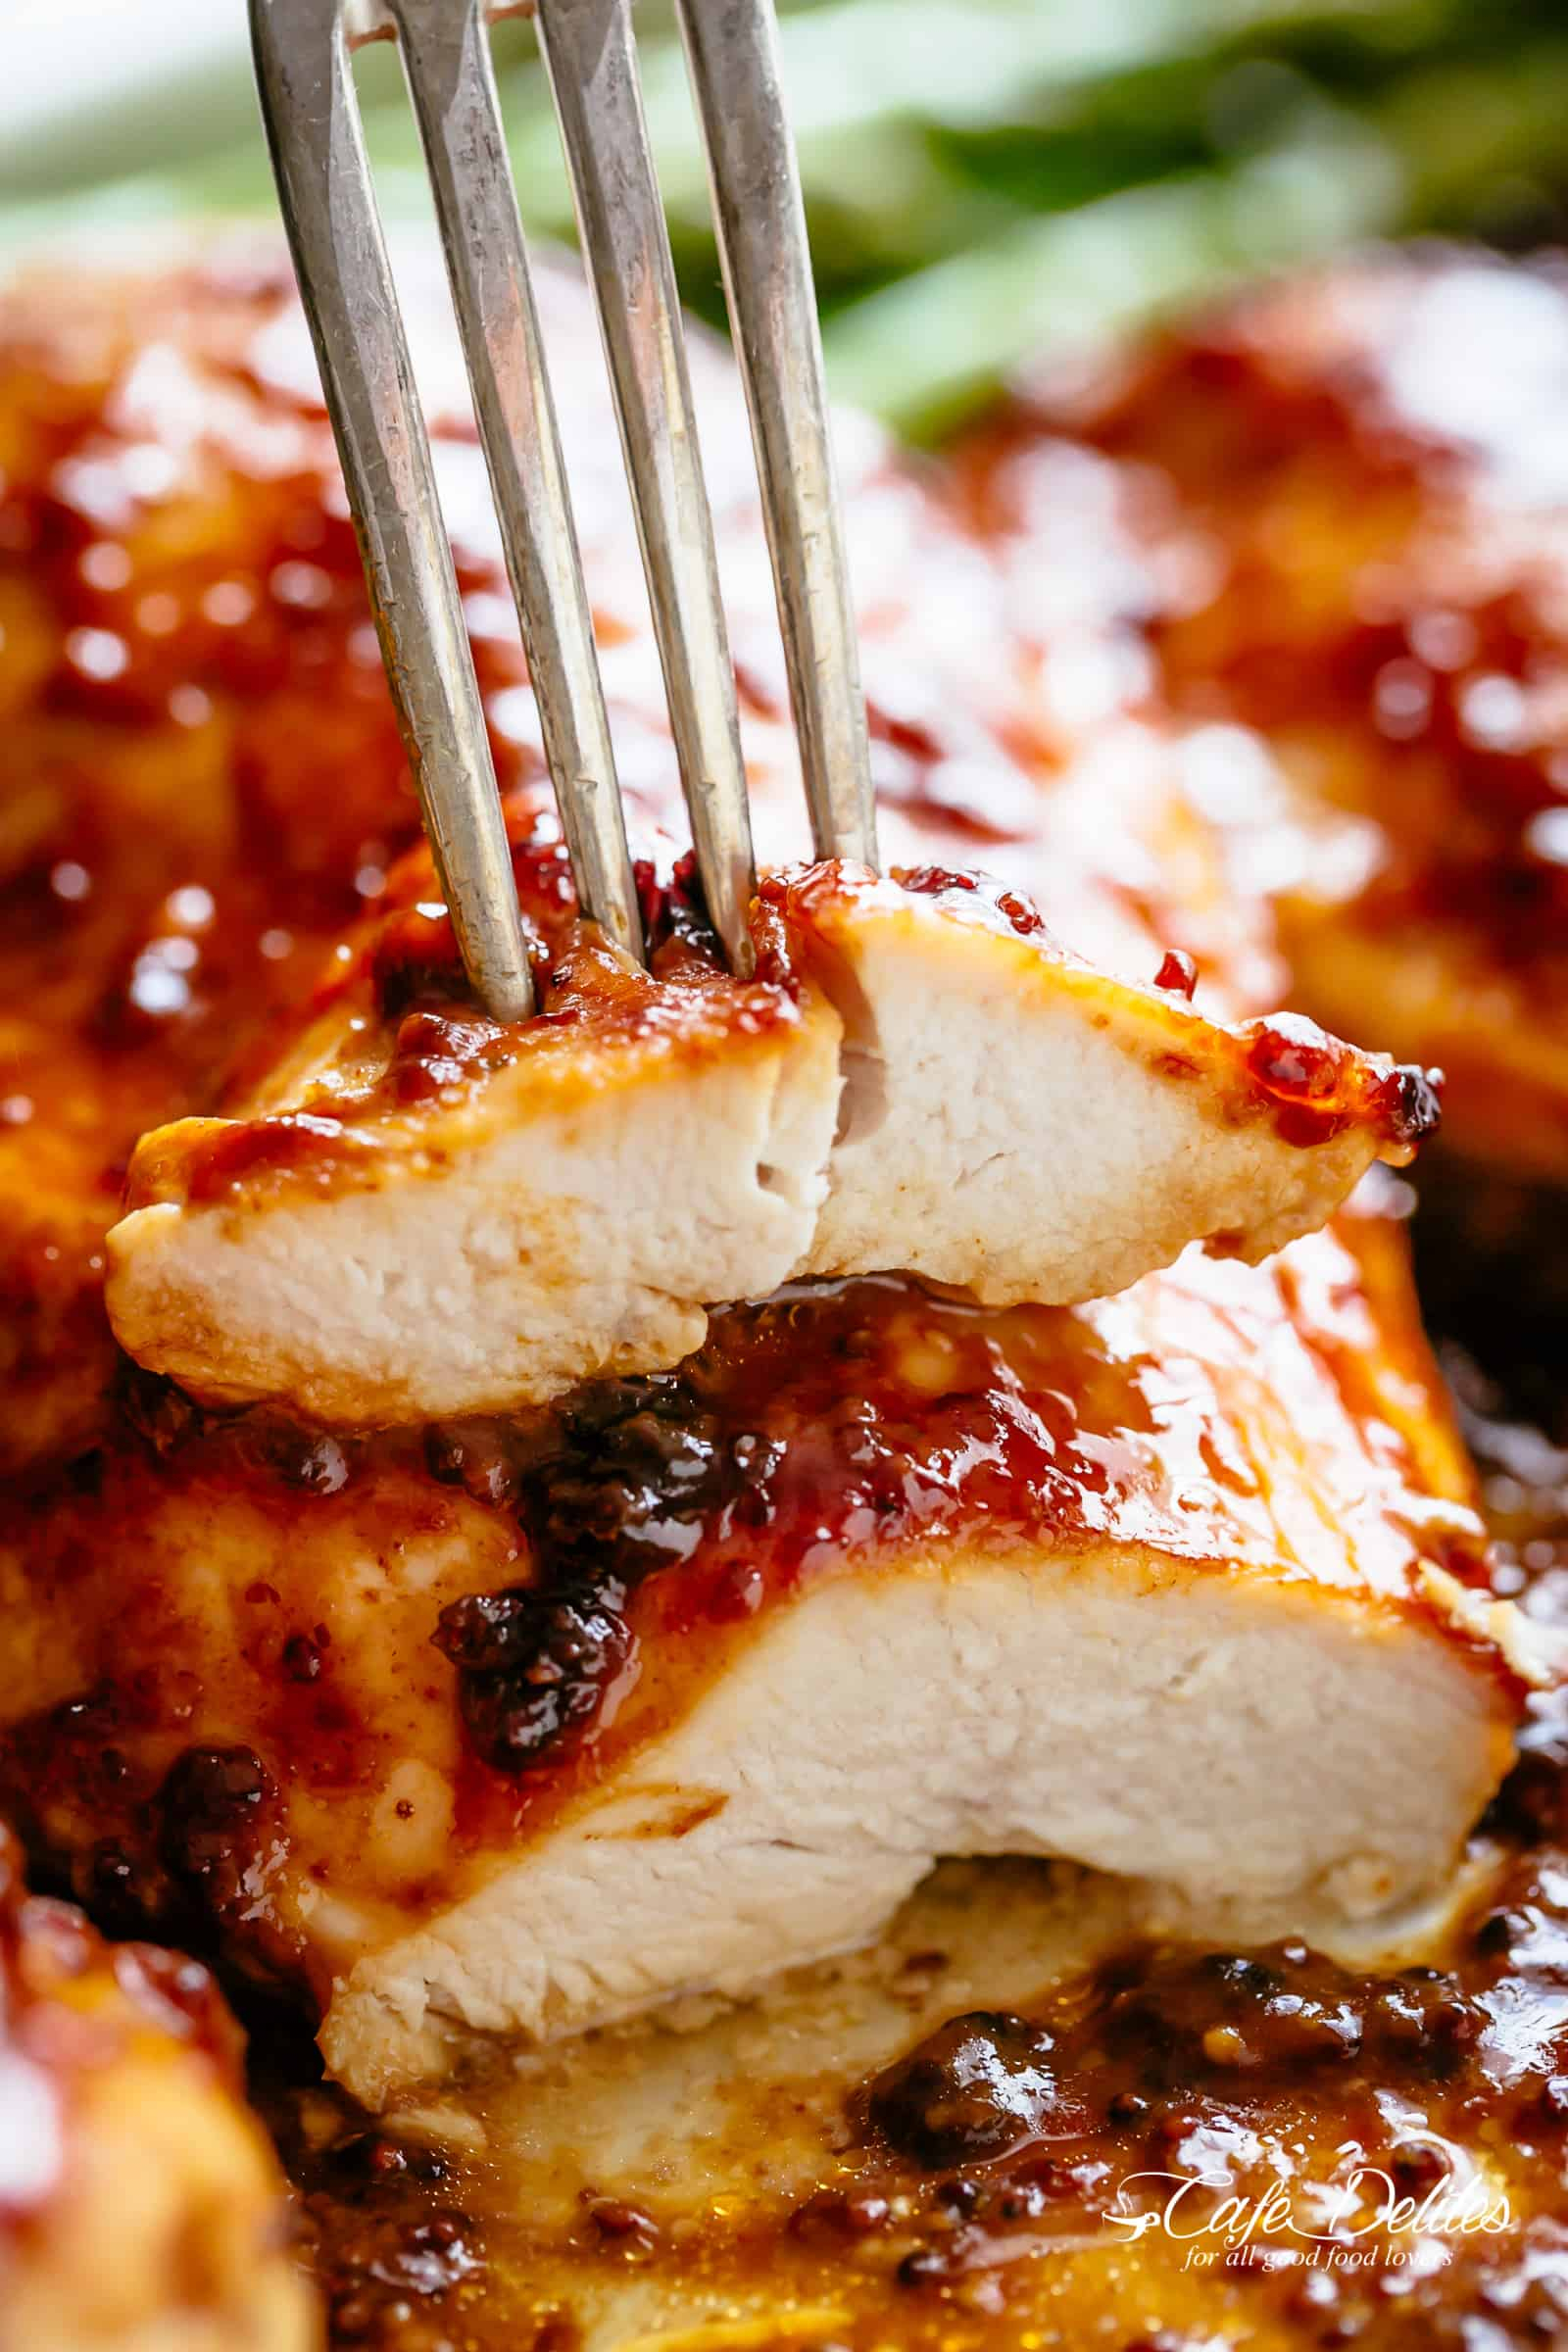 10 Stylish Dinner Ideas With Boneless Chicken Breast 2023